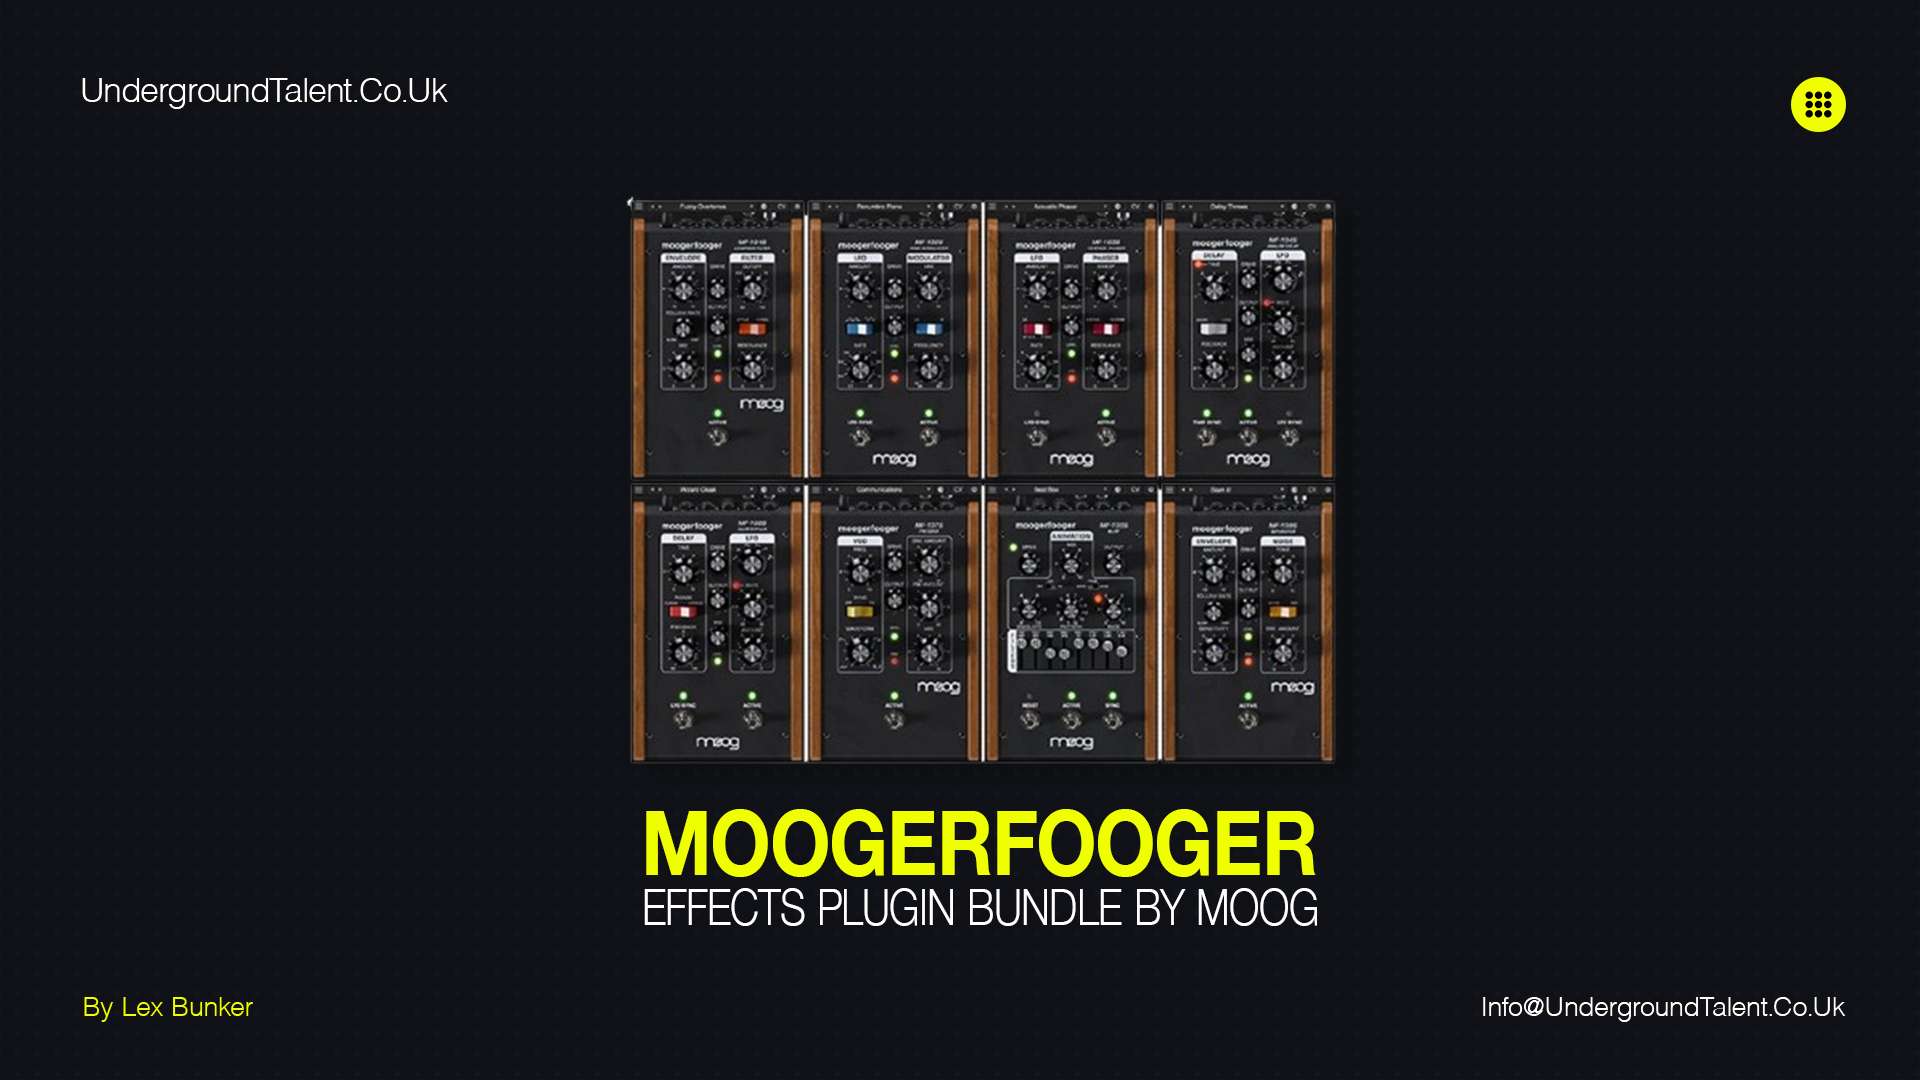 Moogerfooger Effects Plugins: Moog’s Analog Sound Goes Digital